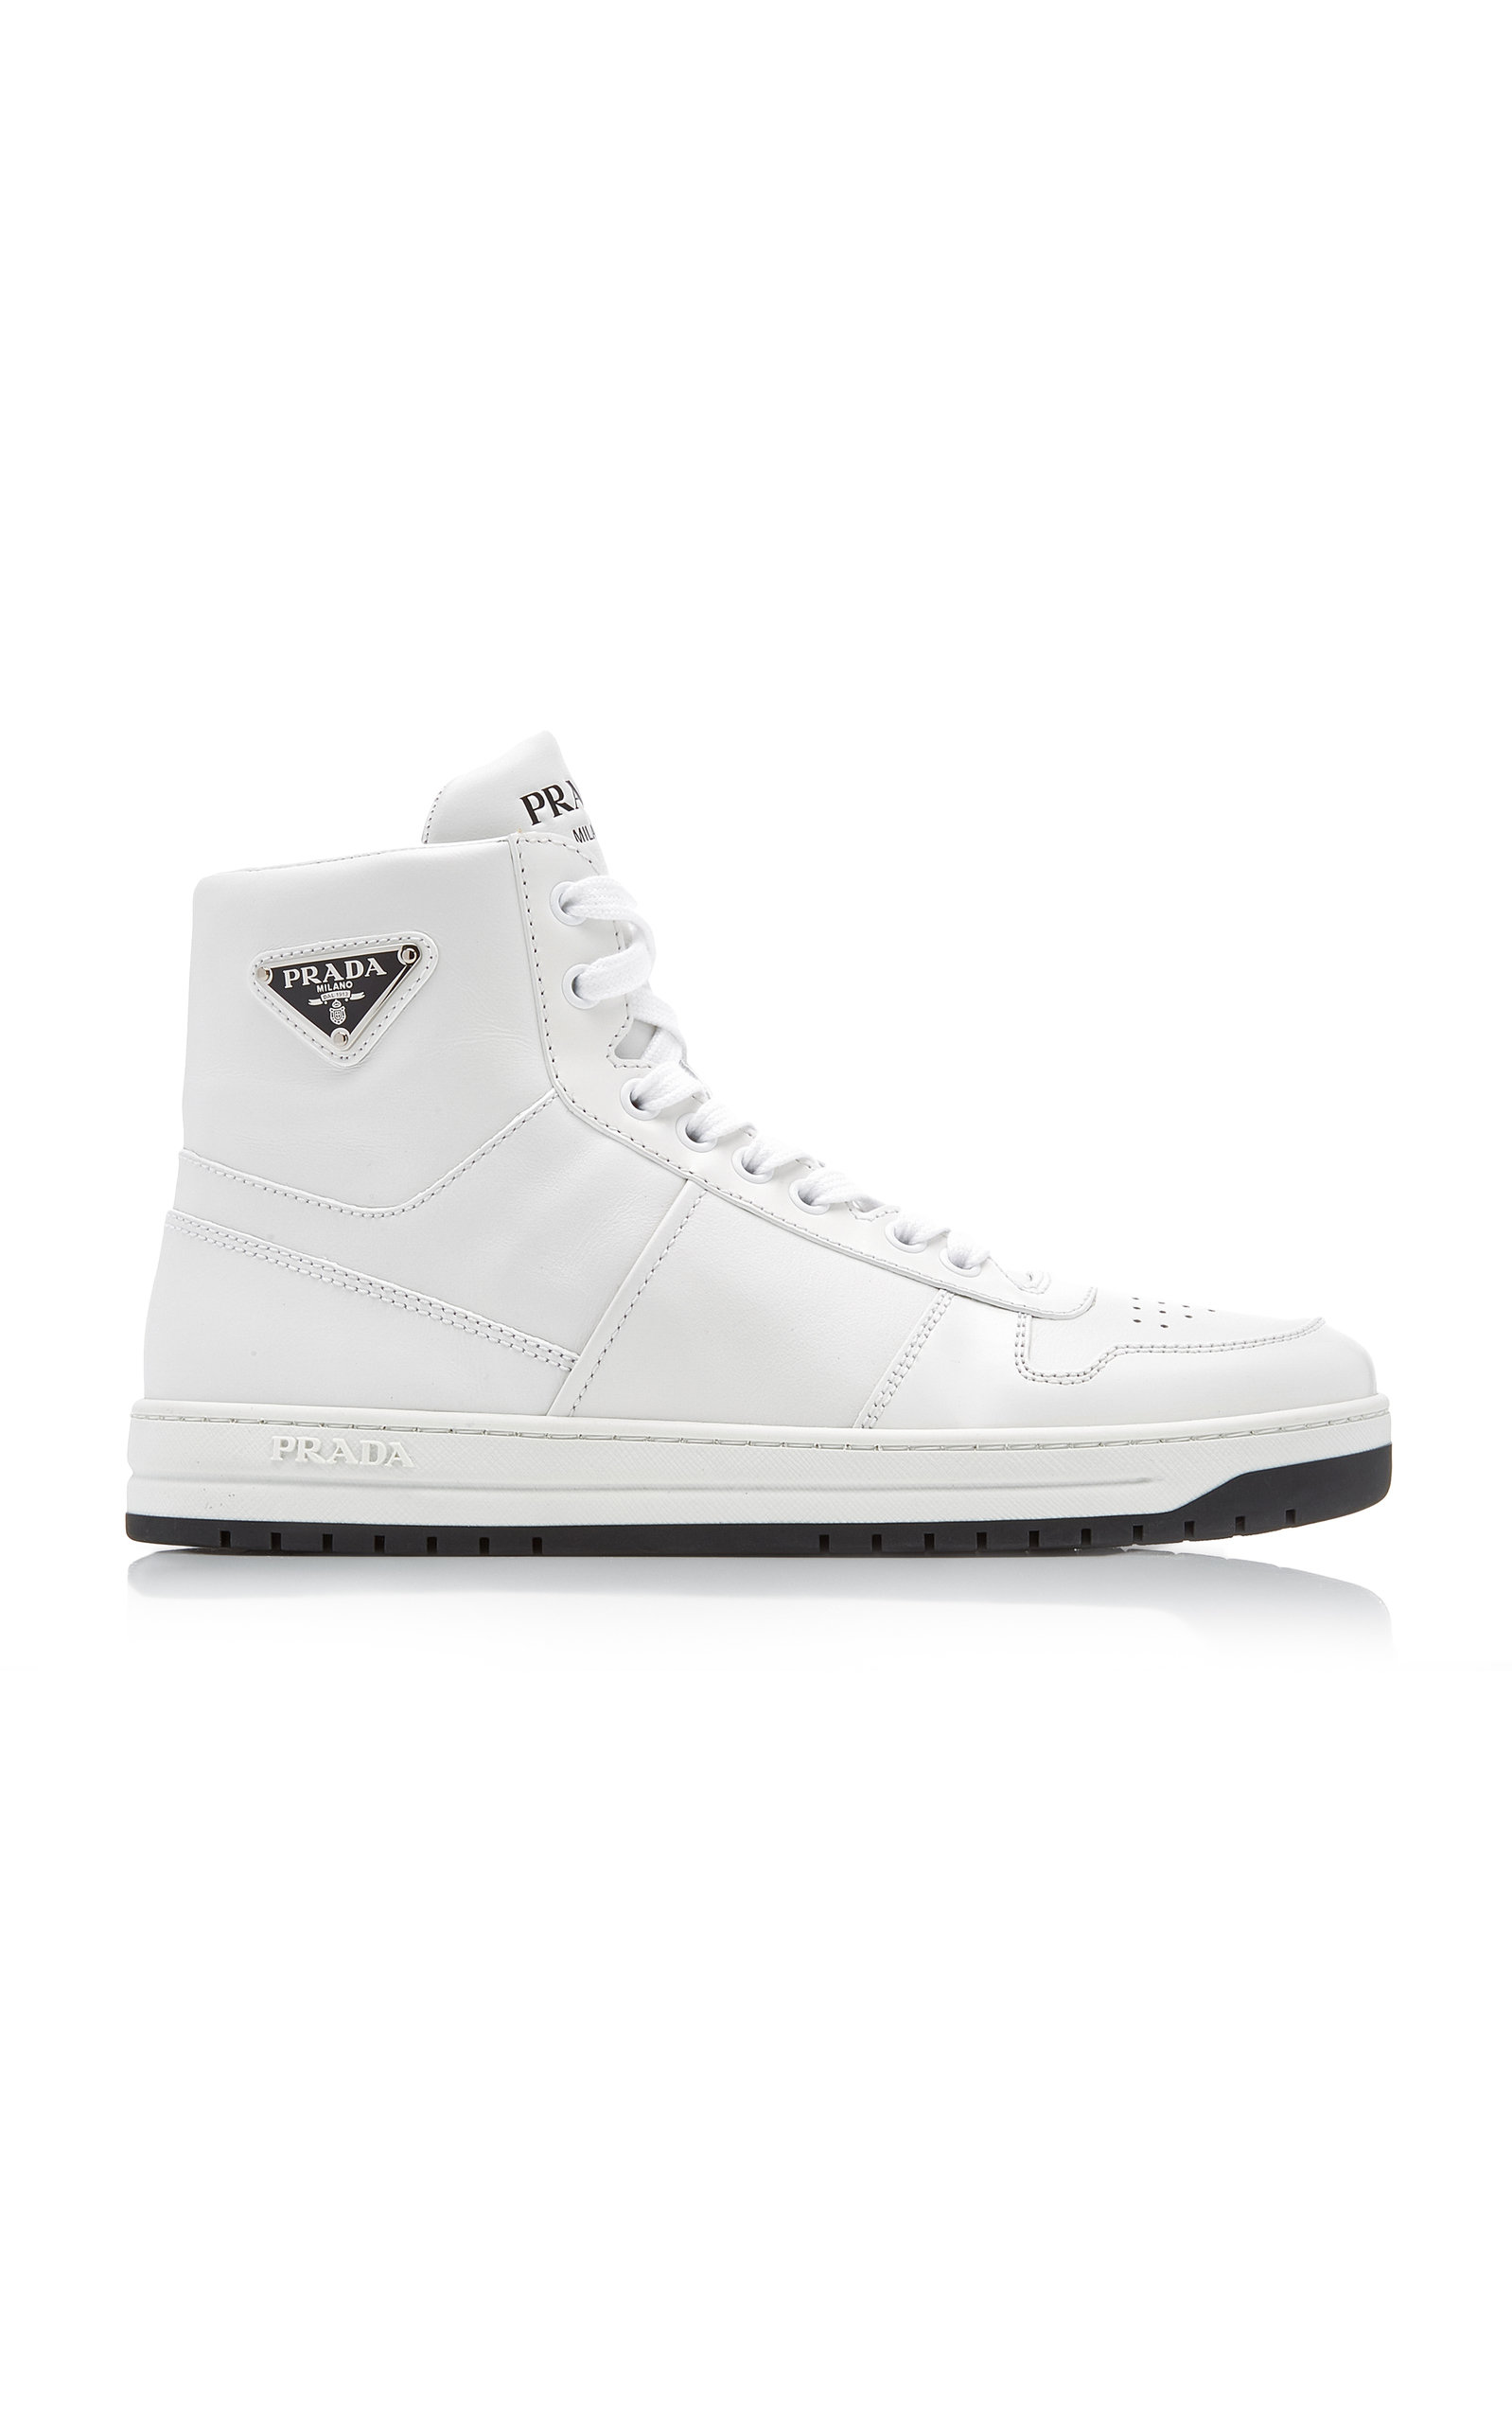 Prada - High Top Sneakers - Black/white - IT 36 - Moda Operandi